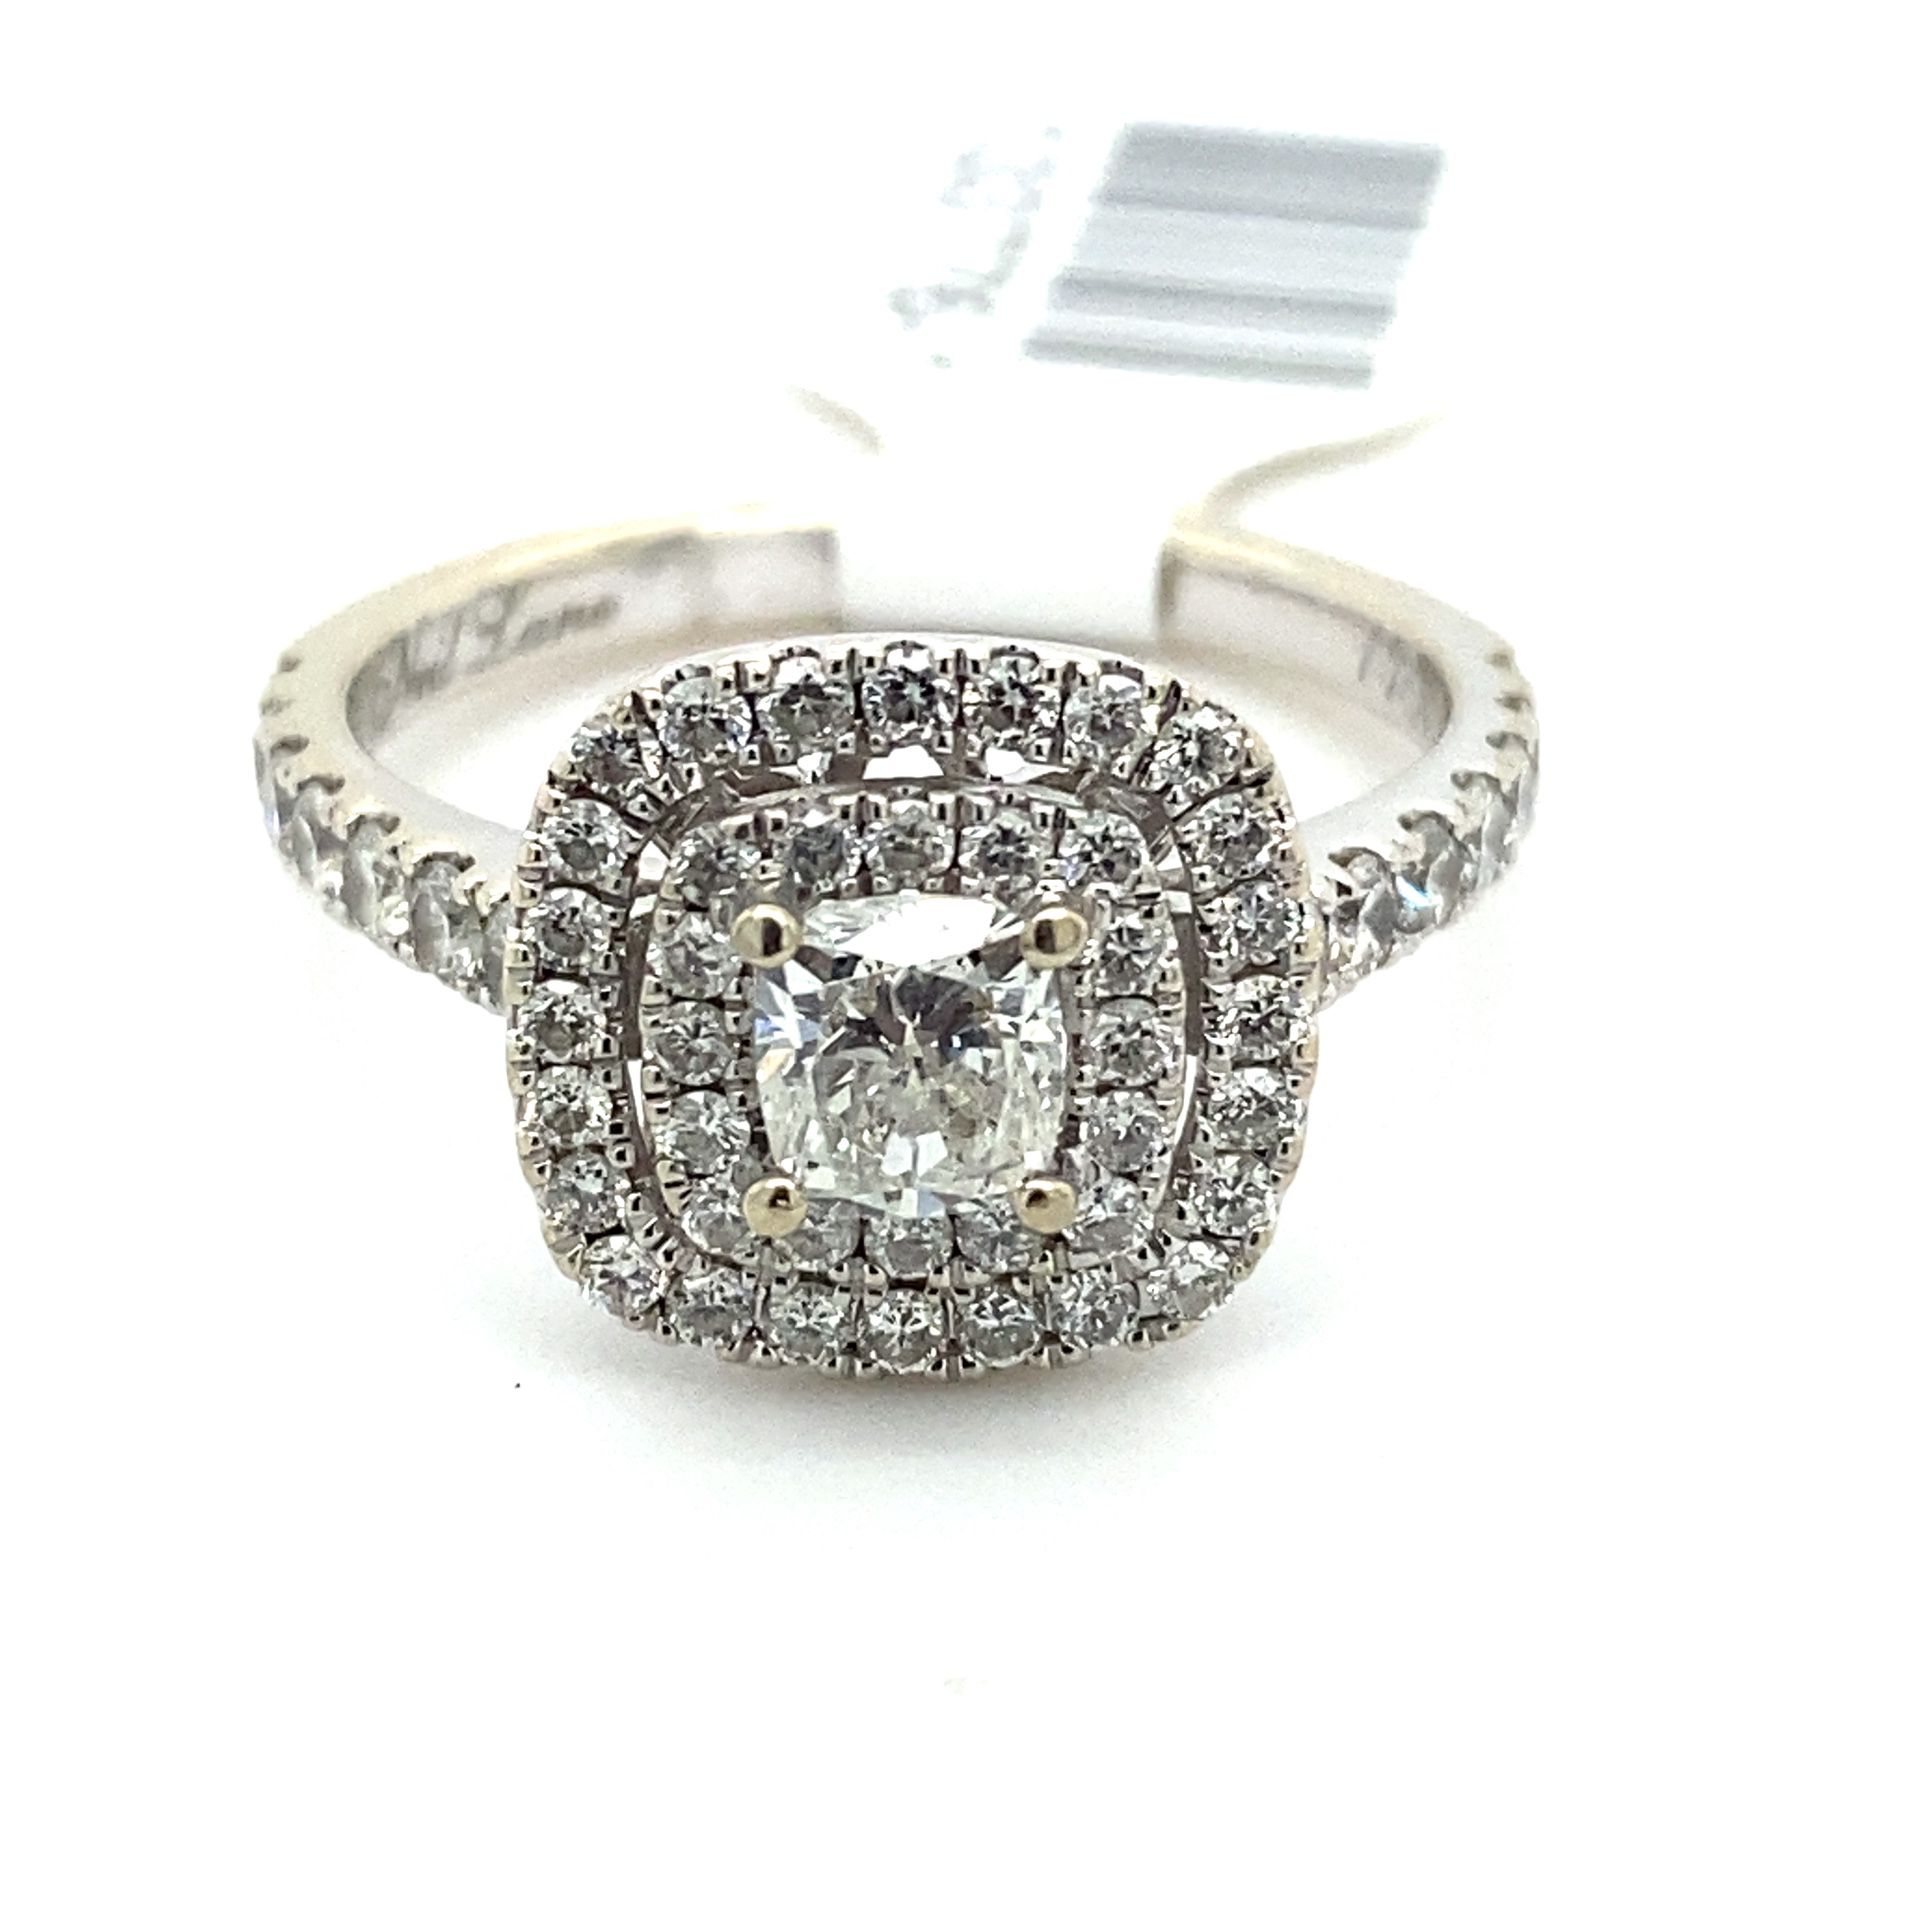 14k White Gold Diamond Engagement Ring 1ctw 3.7grams Size 6 1/2  133776 1